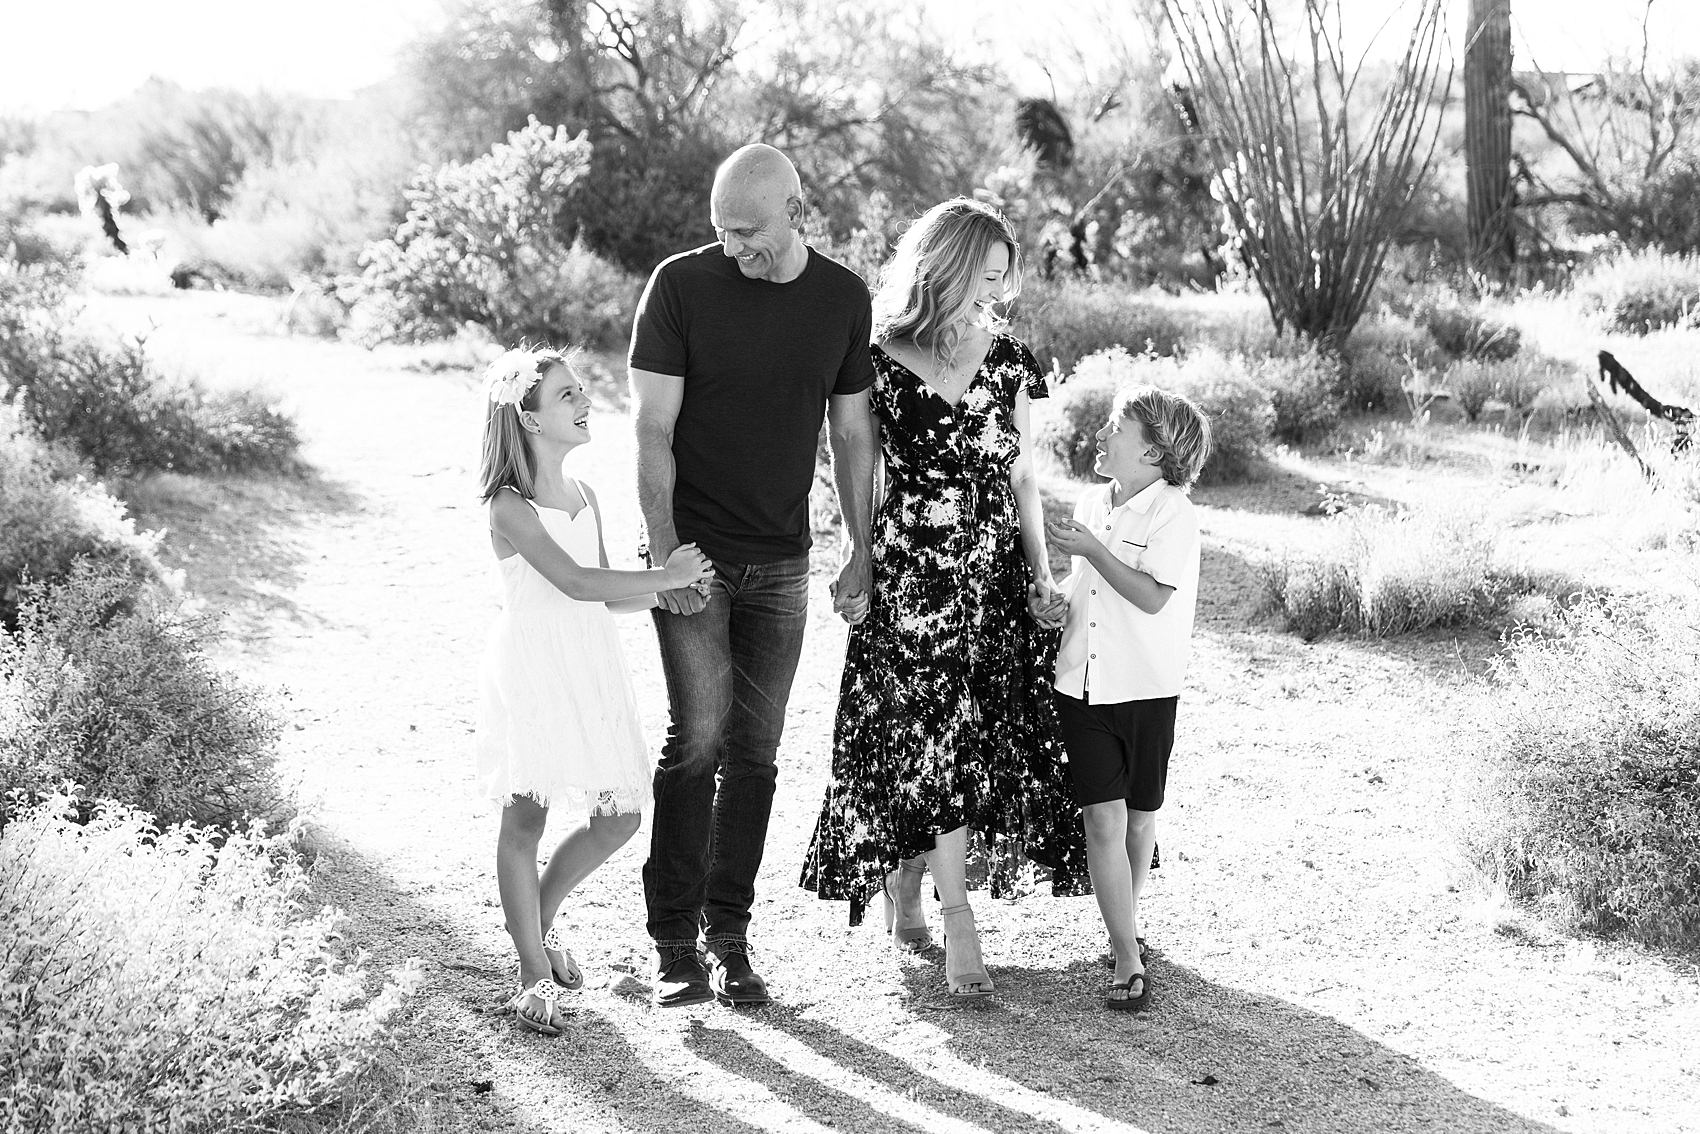 Leah Hope Photography | Scottsdale Phoenix Arizona Family Photos | Desert Landscape Cactus Scenery Family Pictures | What to Wear | Family Posing Poses | Scottsdale Photographer